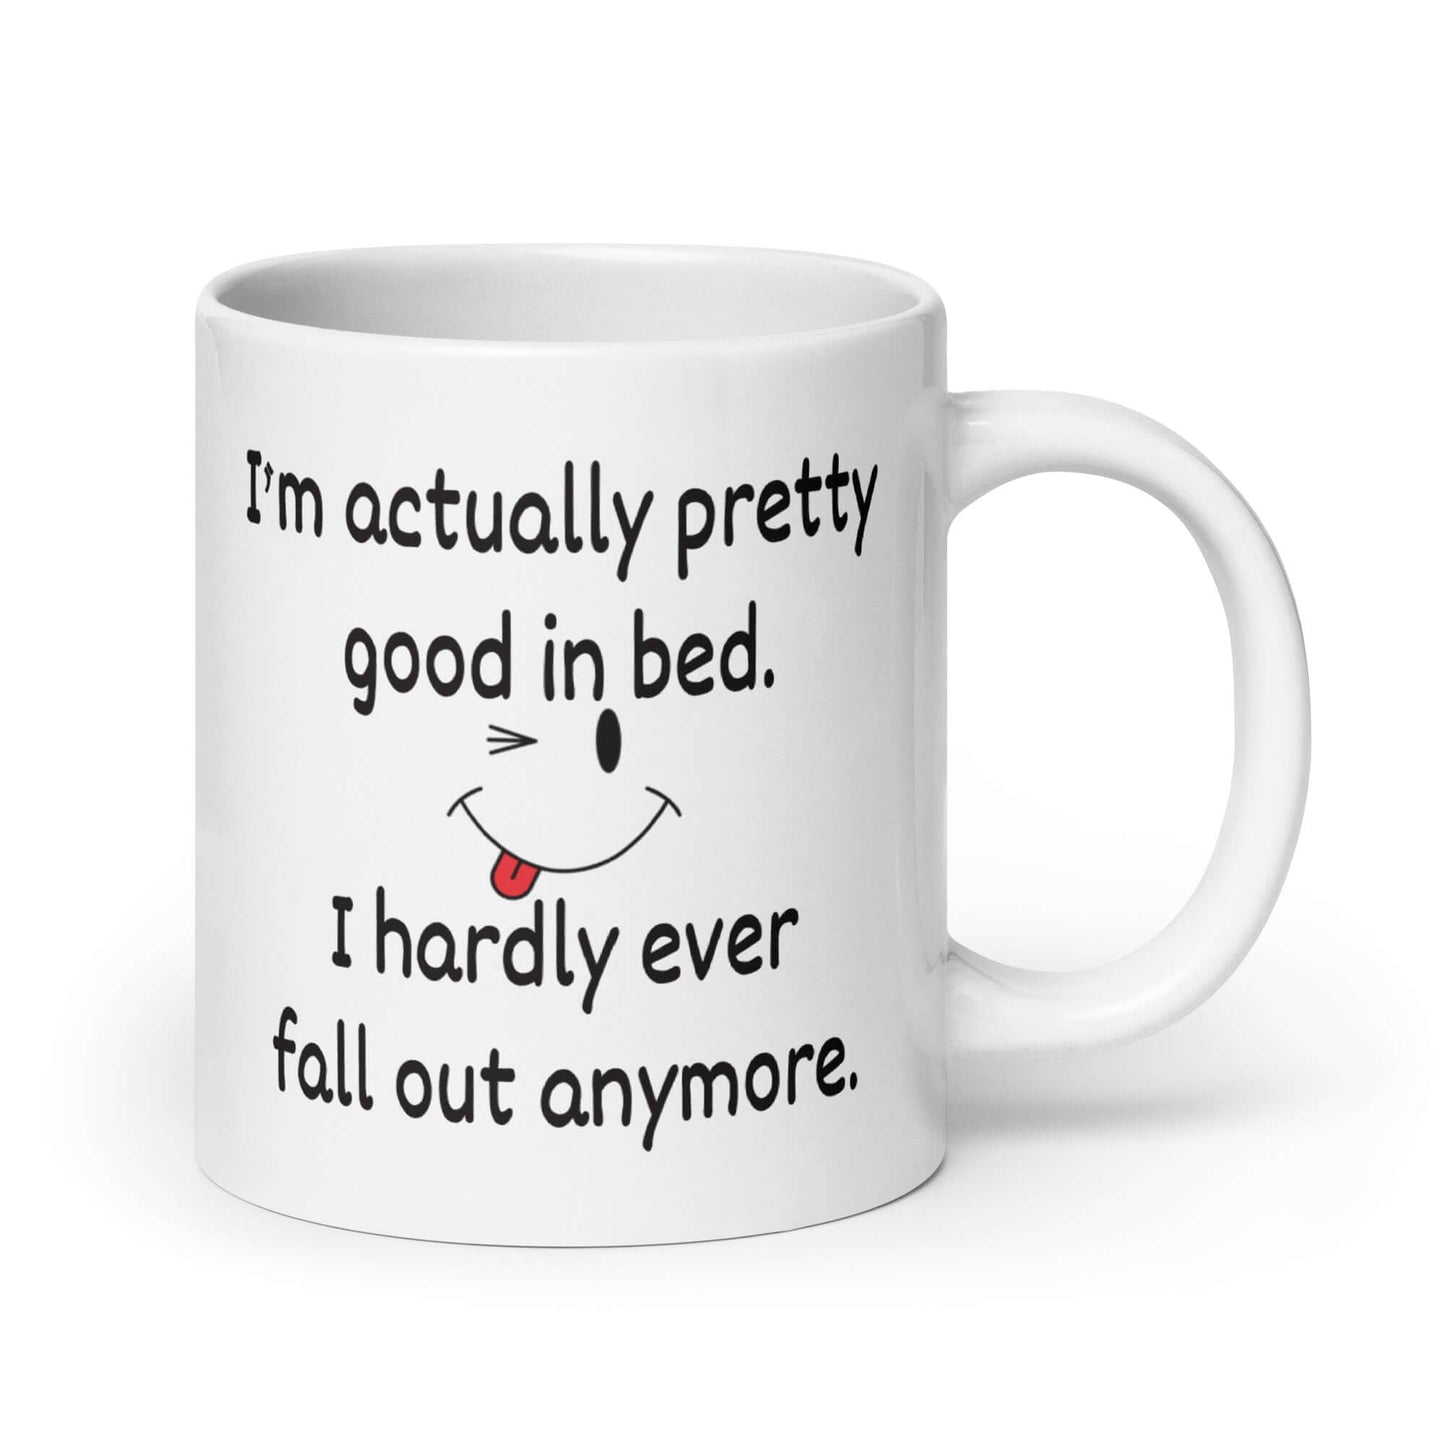 Funny good in bed mug